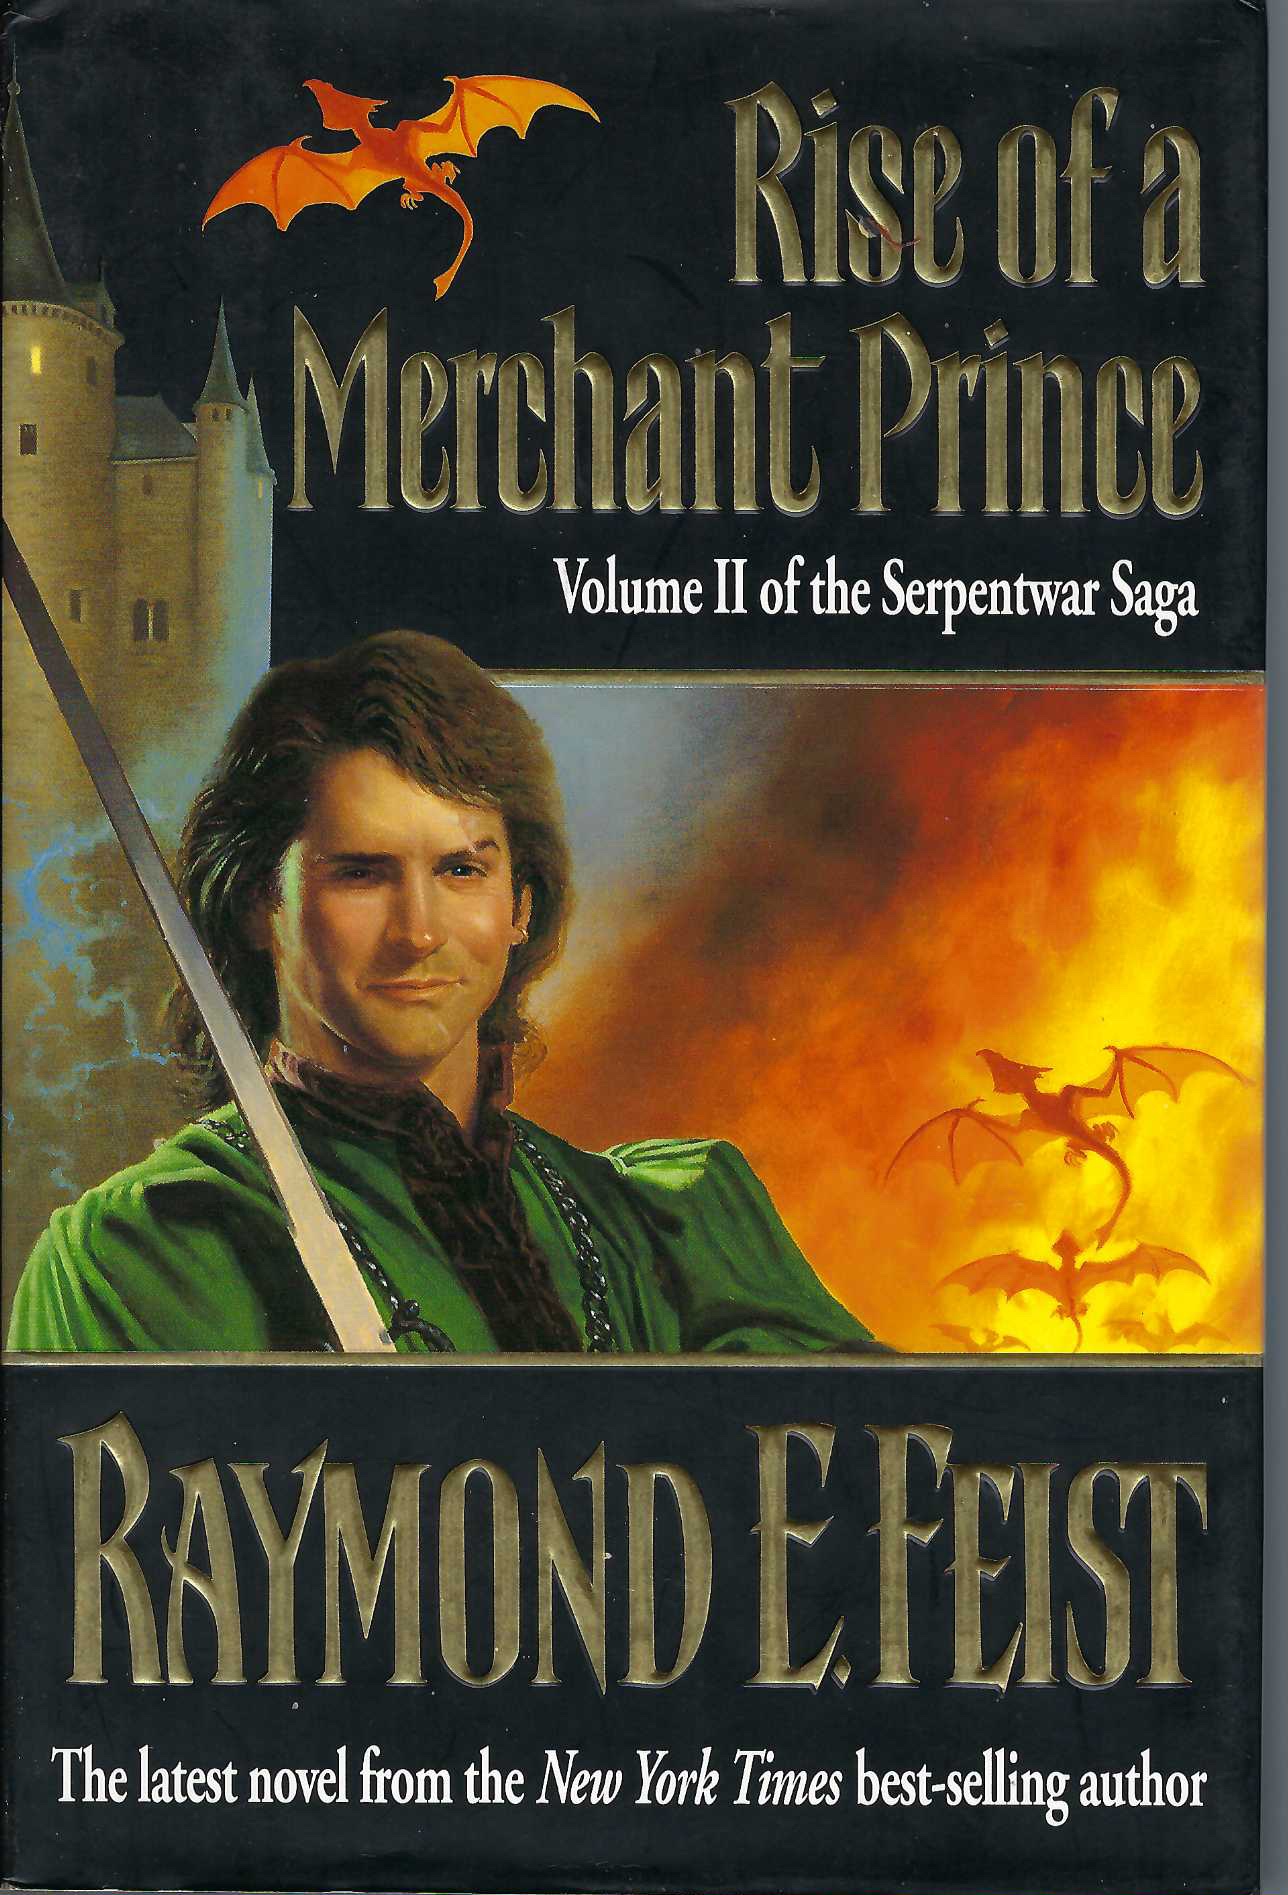 FEIST, RAYMOND E. - Rise of a Merchant Prince Volume I I of the September Saga